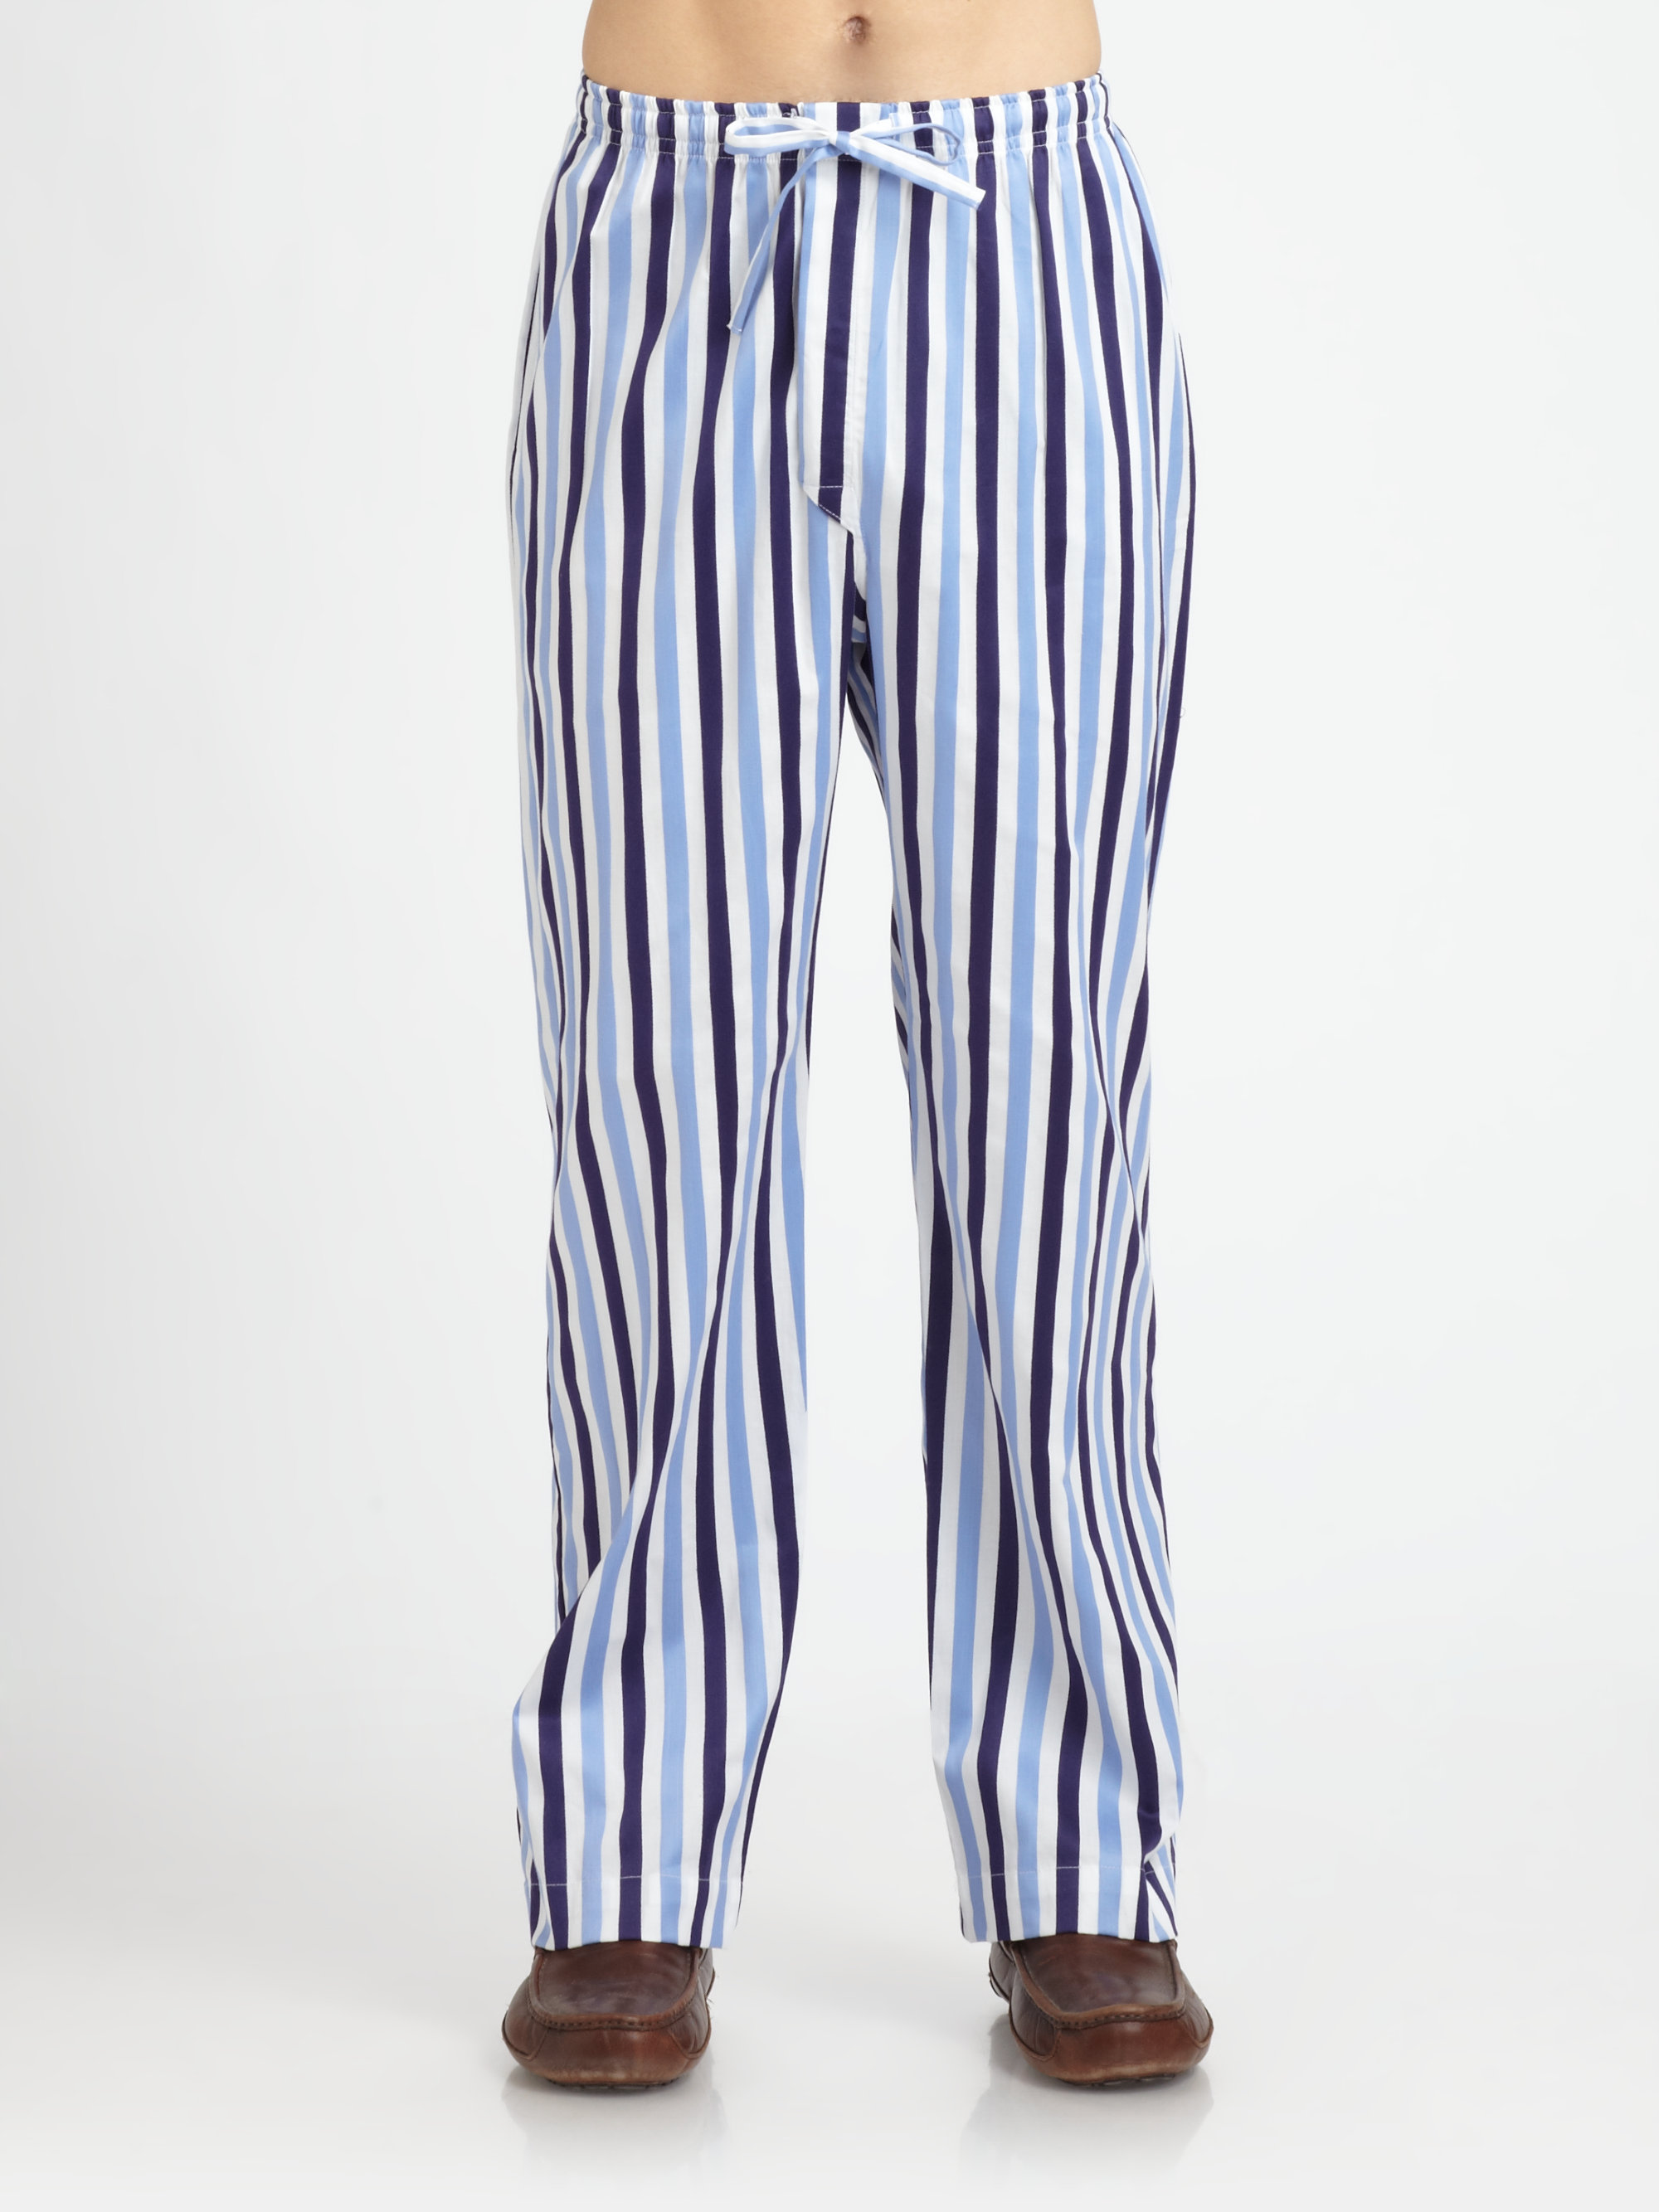 Lyst - Derek Rose Striped Pajama Pants in Blue for Men